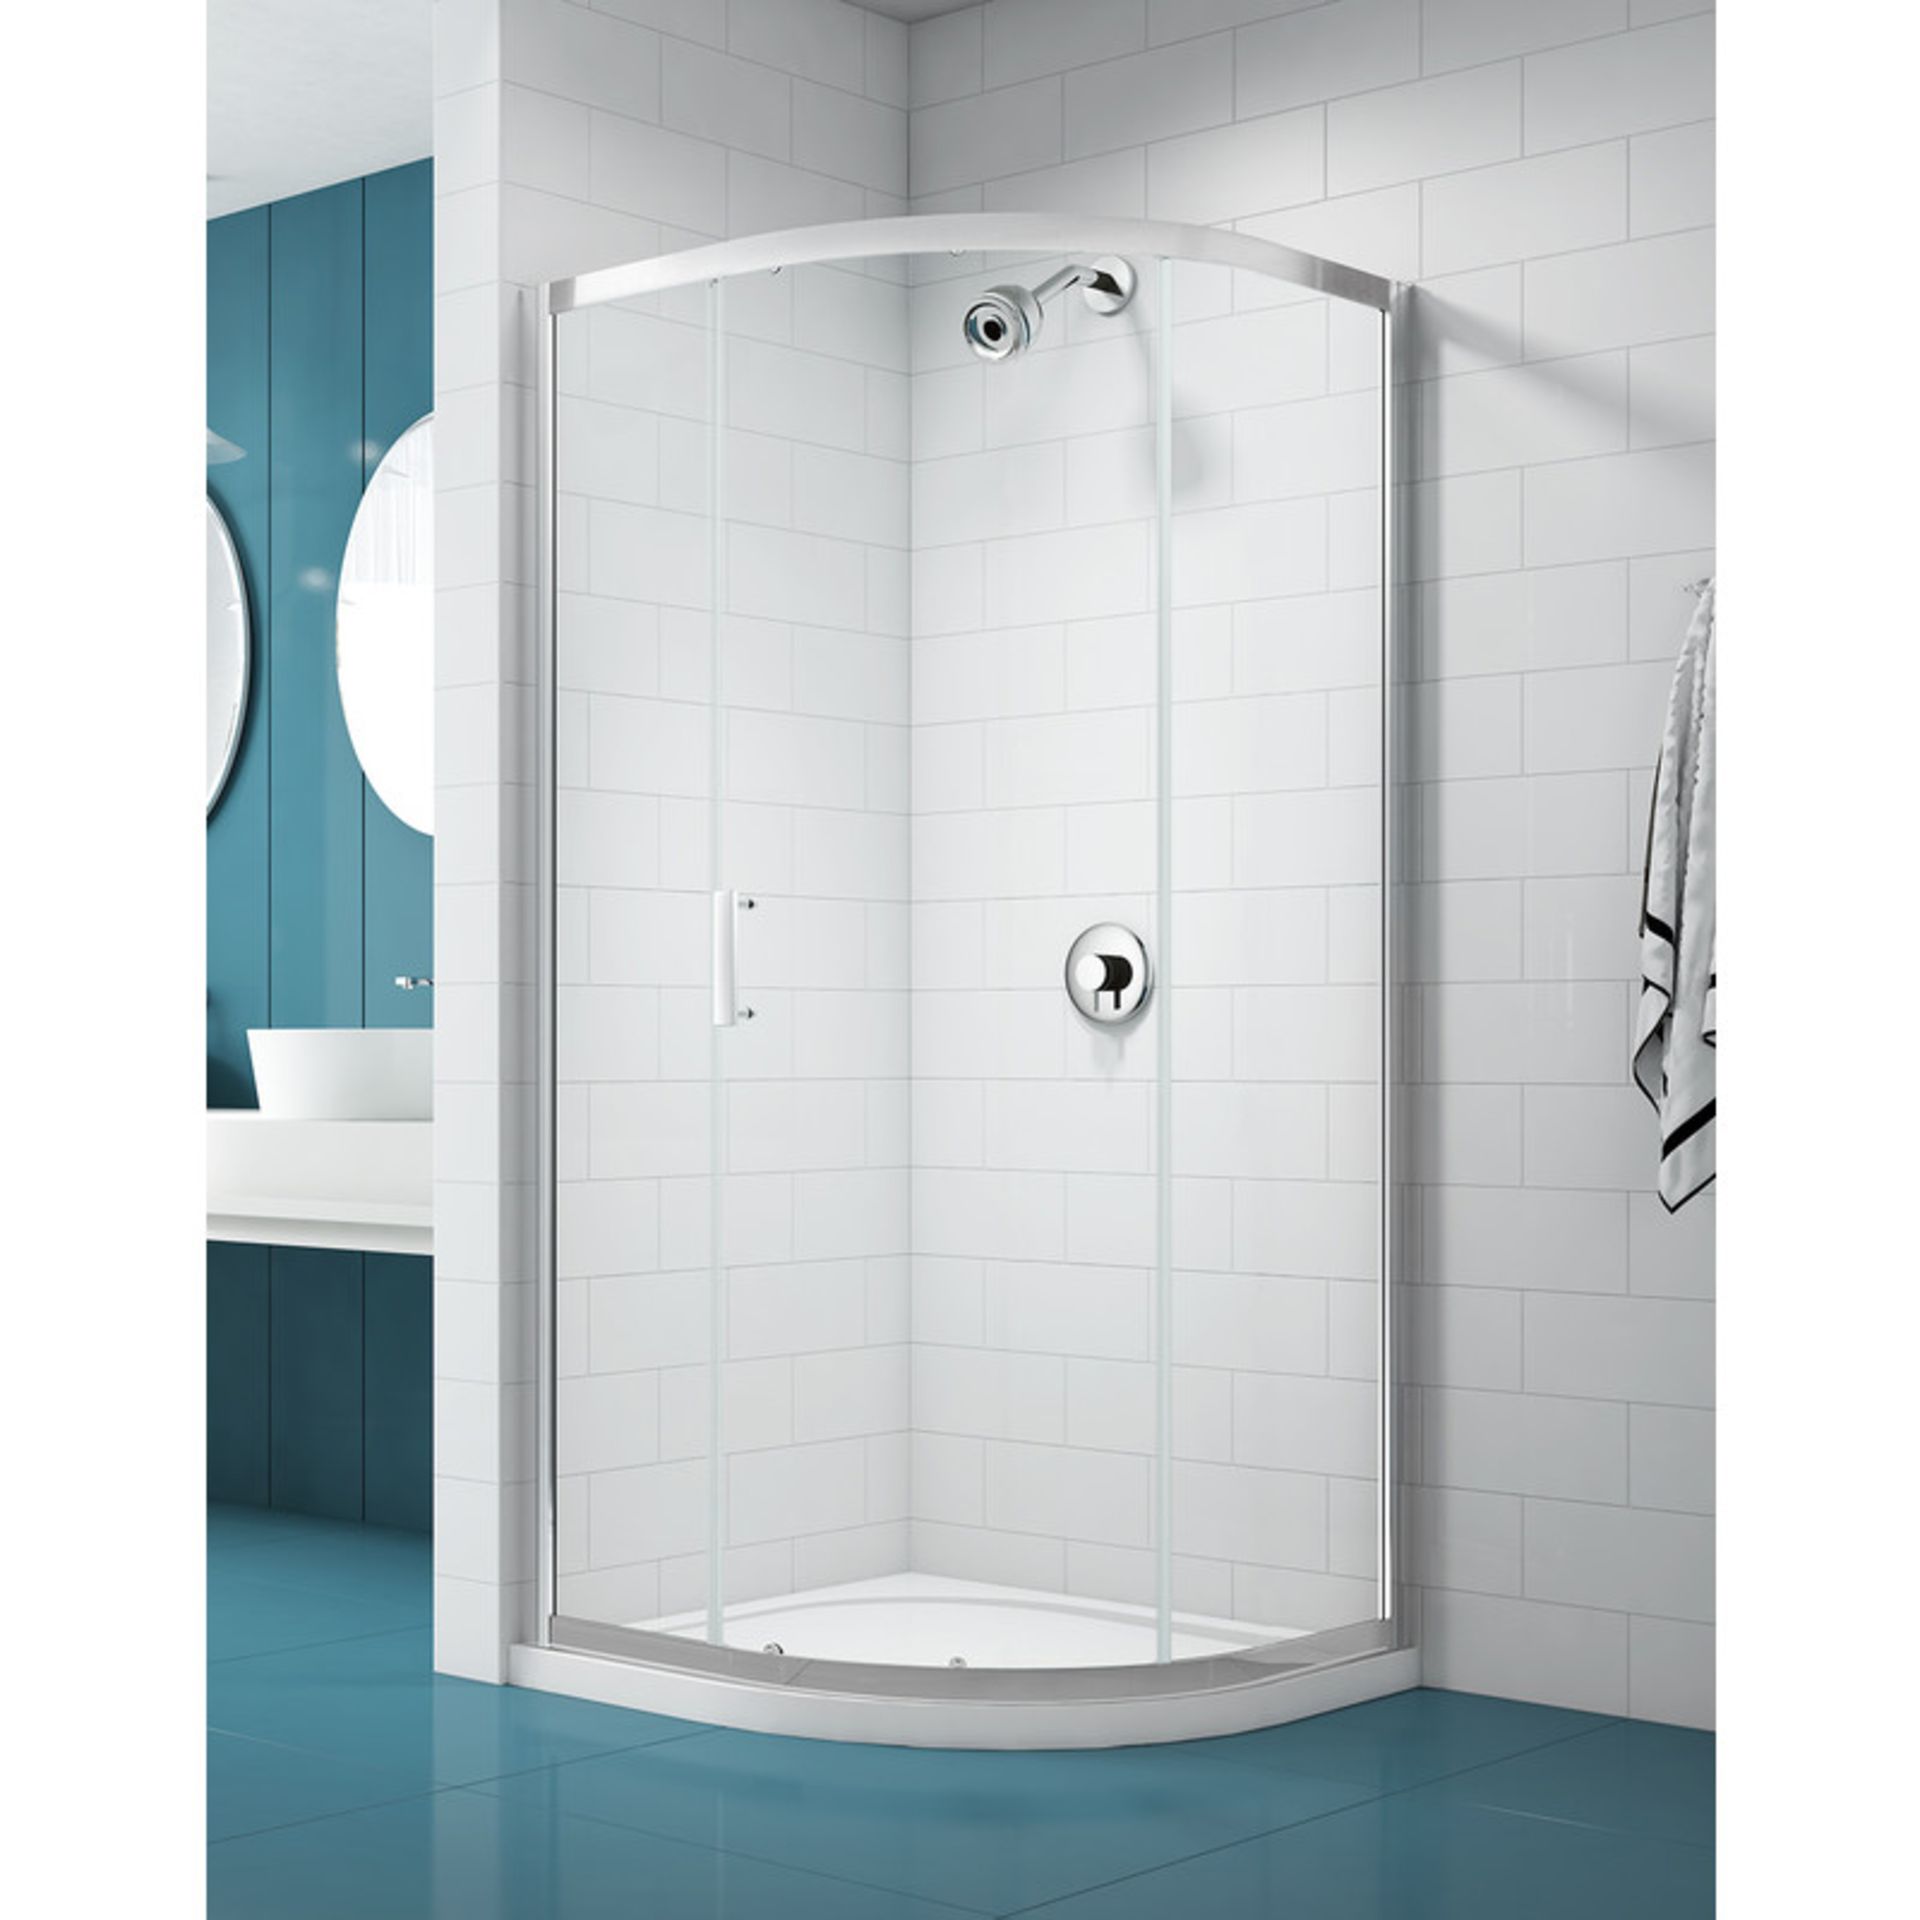 (SUP19) New 900x900mm 1 Door Quadrant Shower Enclosure. RRP £398.29.Constructed Of 6mm Lightweight